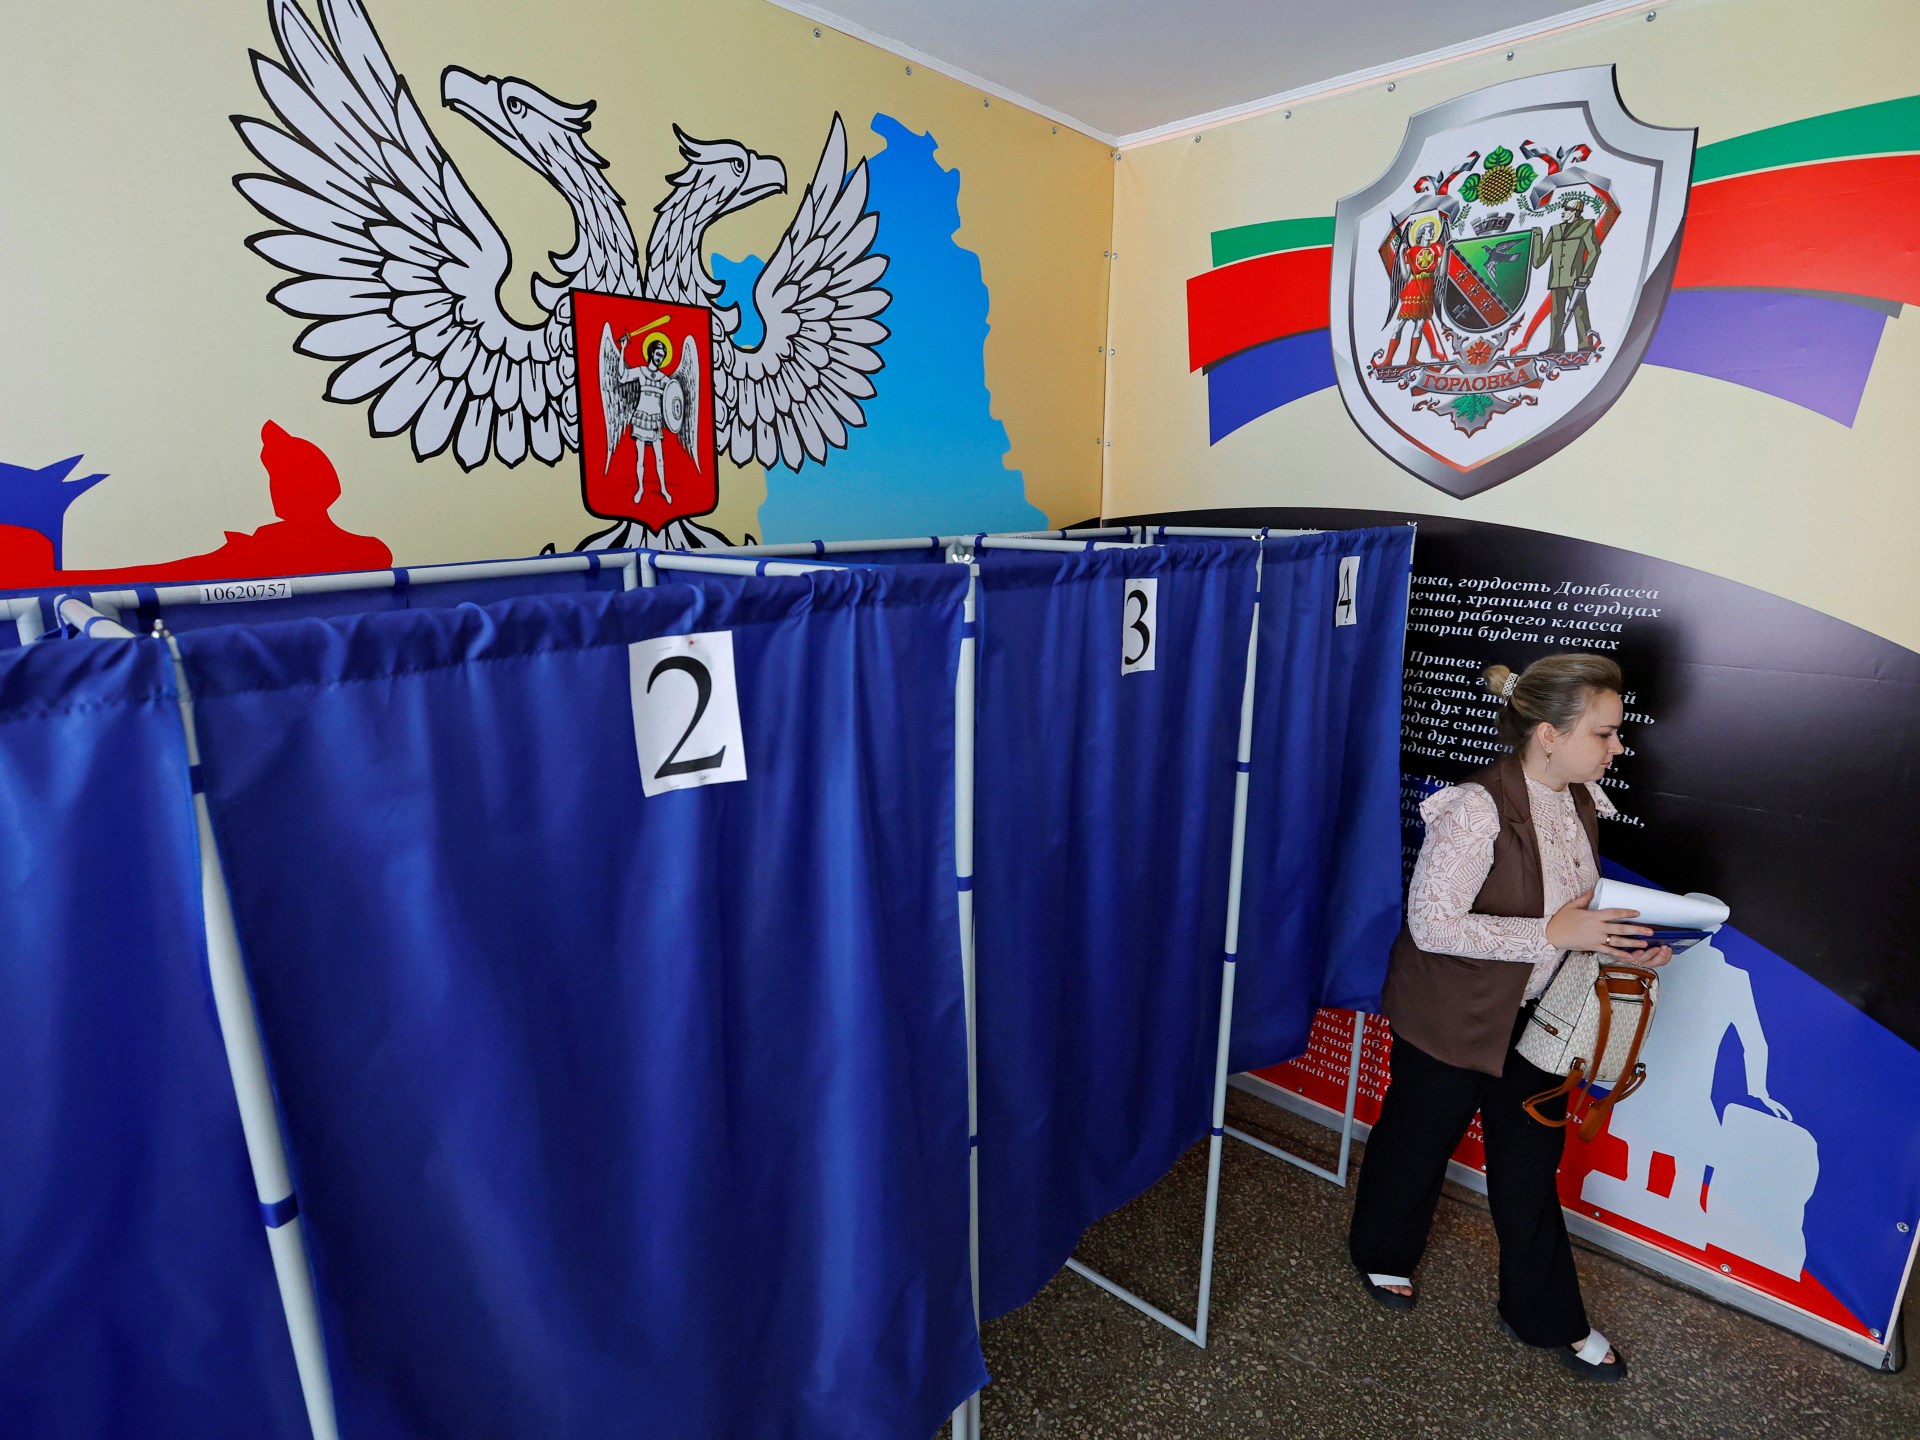 Russia plans presidential vote in annexed Ukrainian regions | News